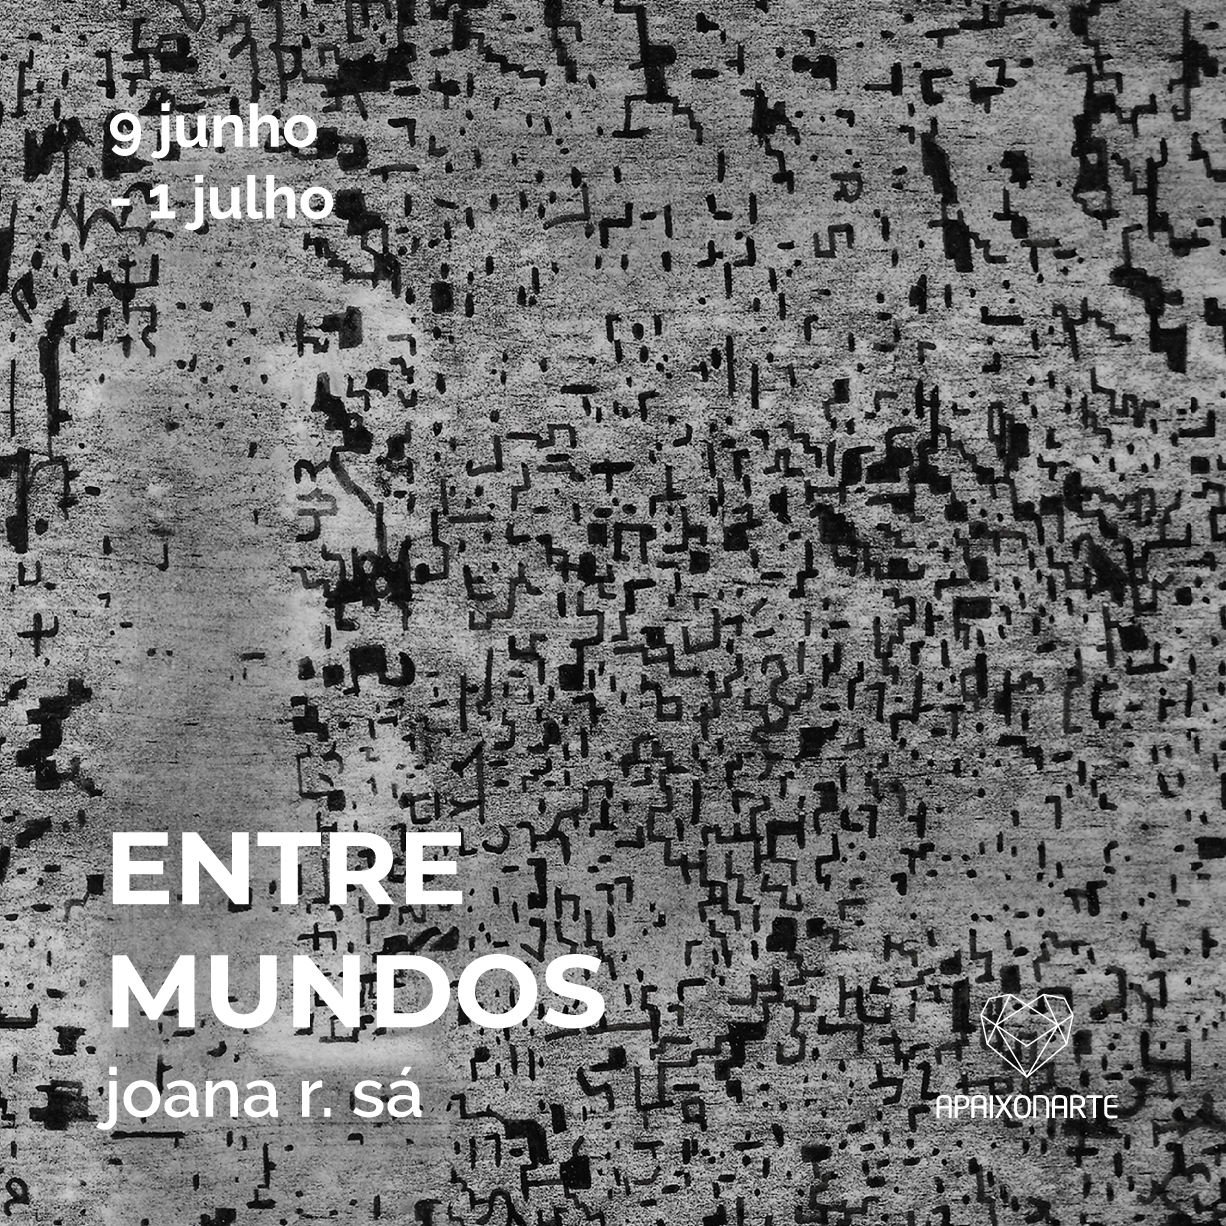 Exhibition poster for Joana R. Sá's exhibition at Apaixonarte